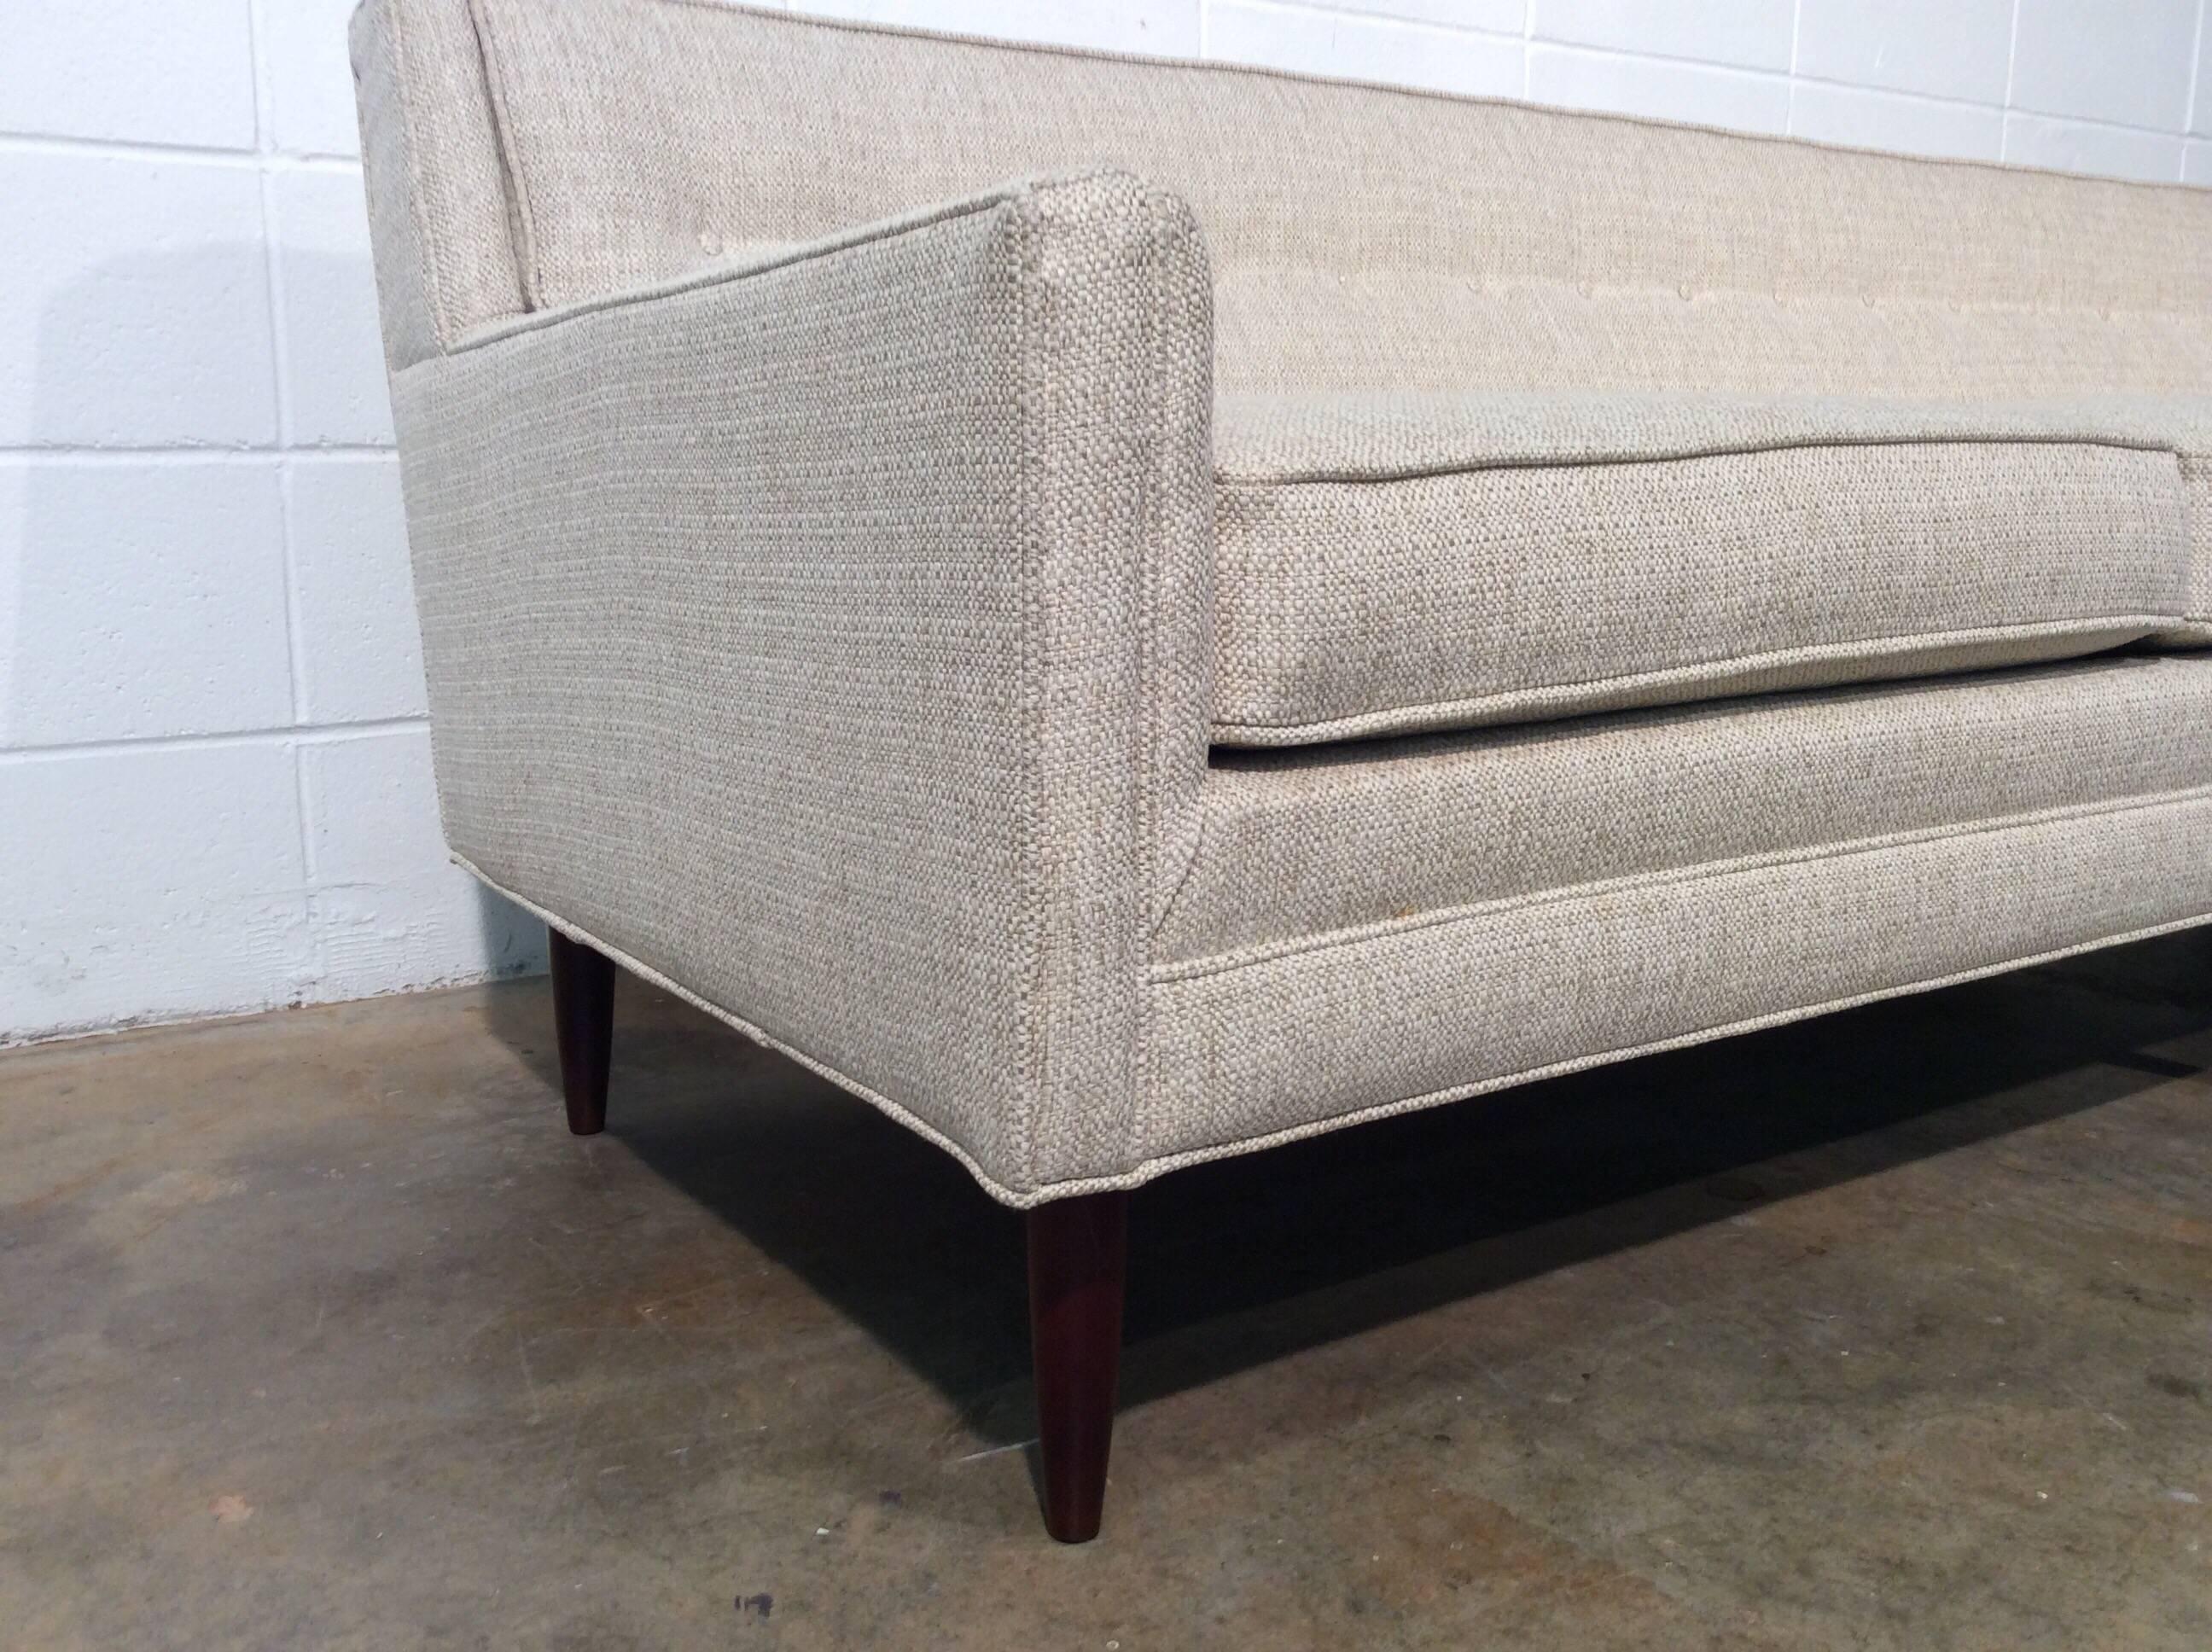 Restored Mid-Century Modern Sofa, Sleek Lines, Neutral Color 1